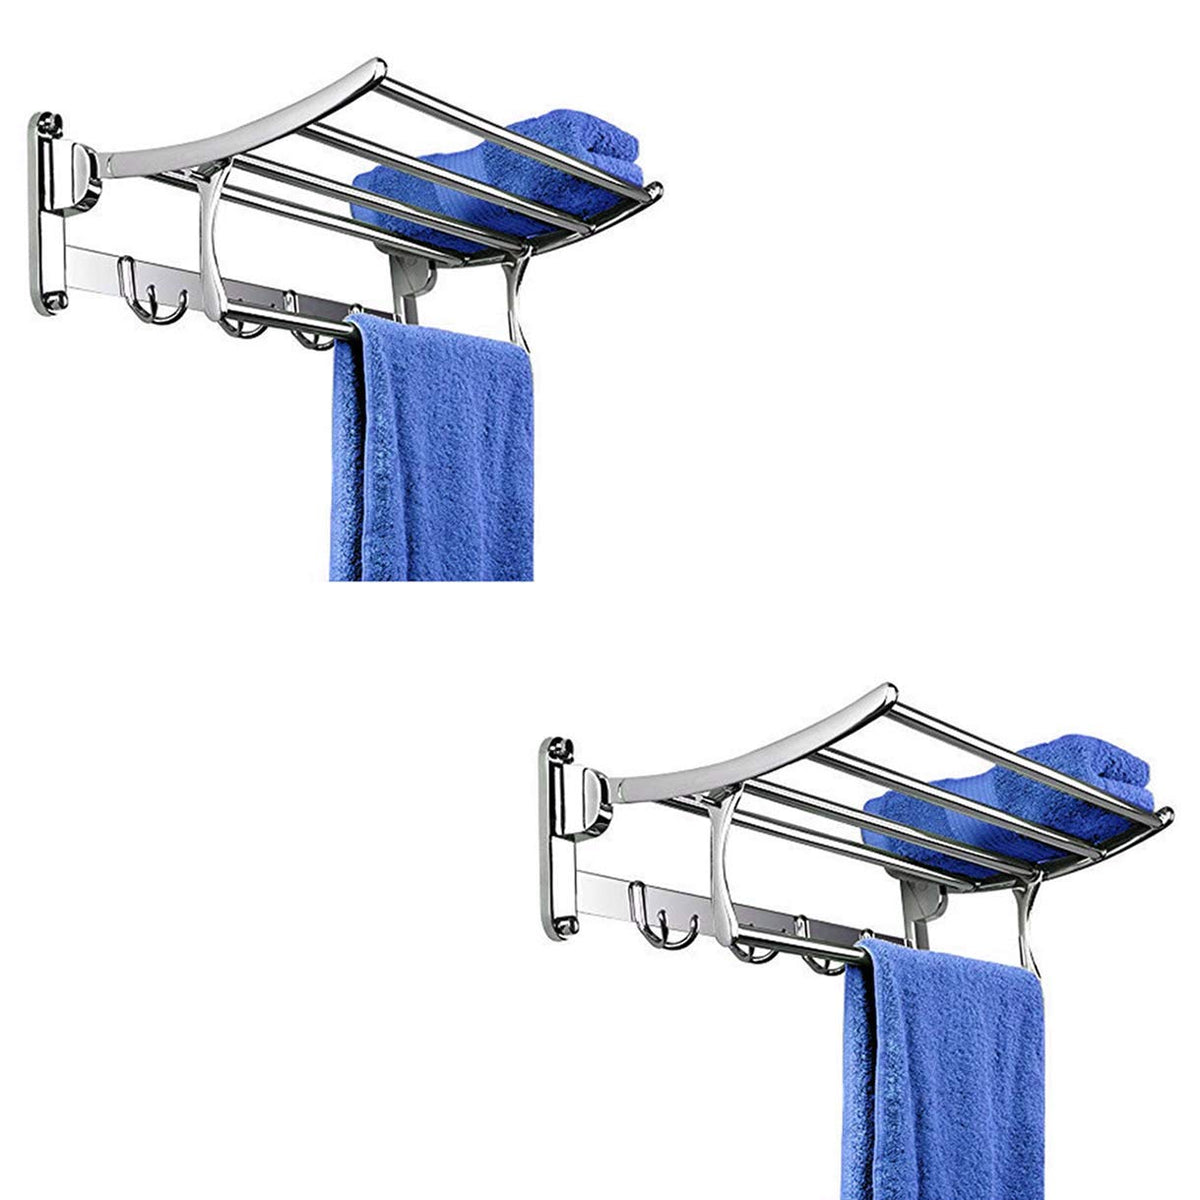 Plantex Stainless Steel Folding Towel Rack for Bathroom / Towel Stand / Hanger / Bathroom Accessories - 18 Inch (2 Piece)